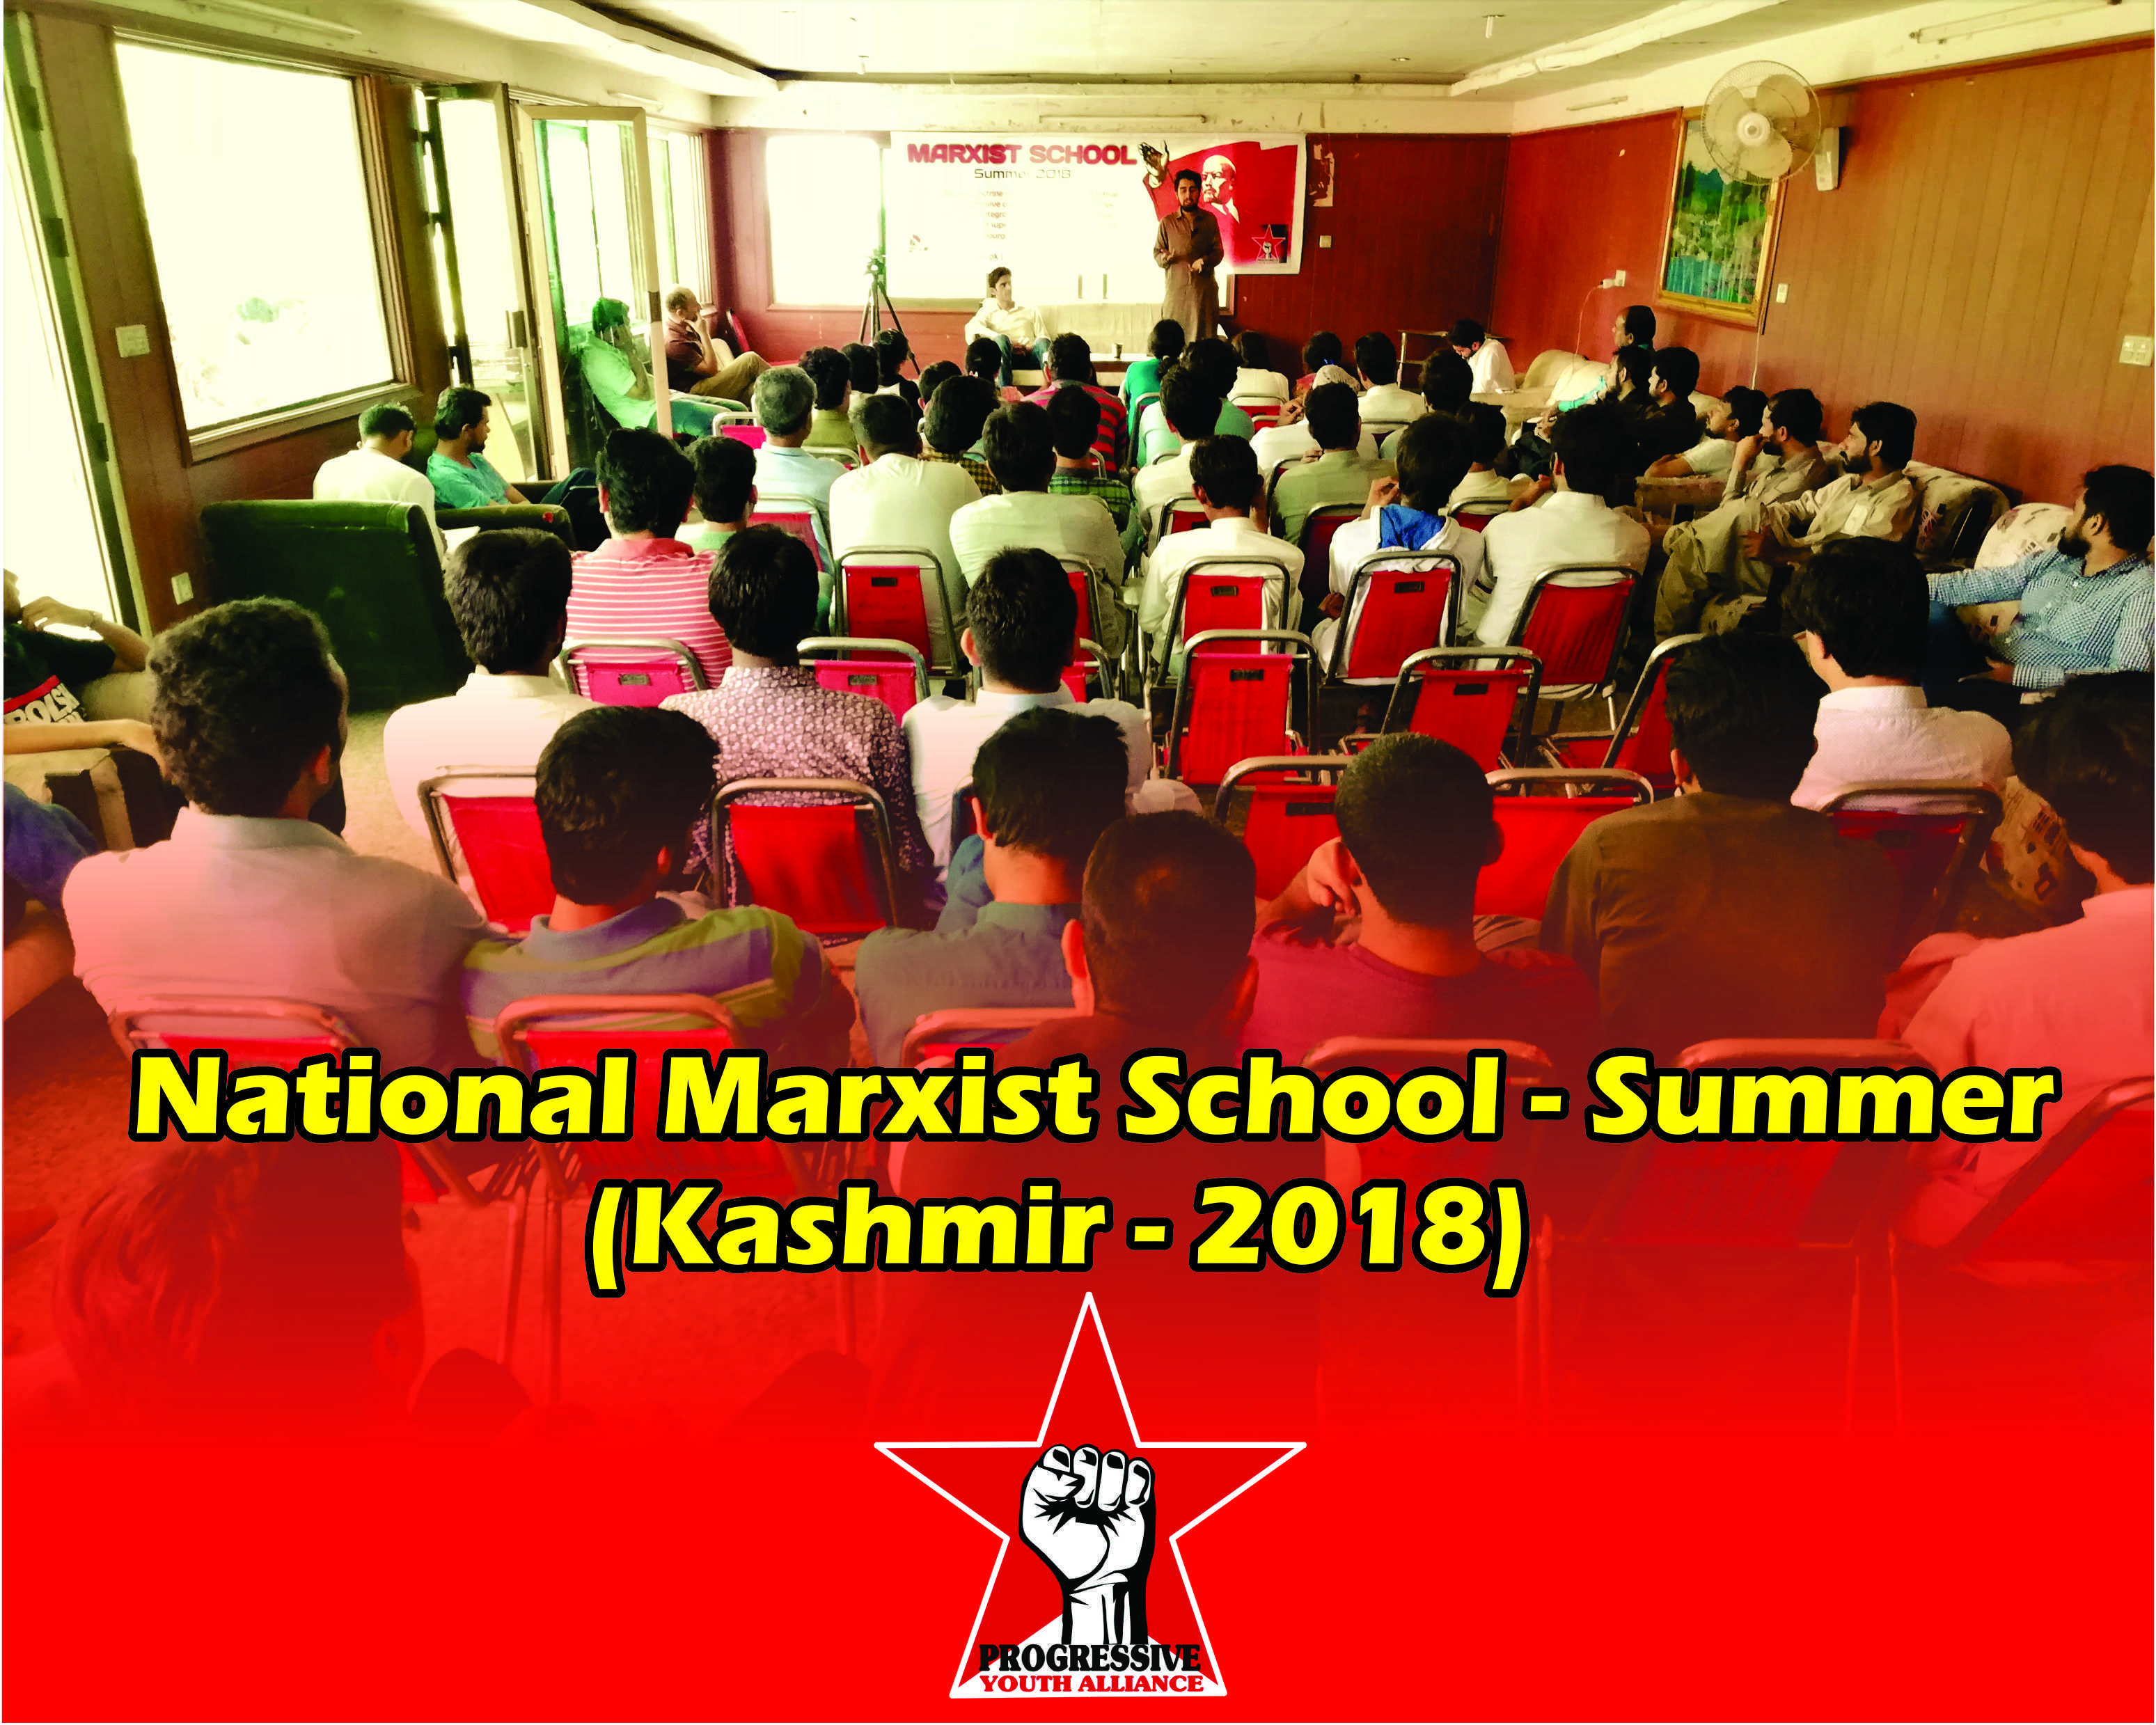 Kashmir Marxist School